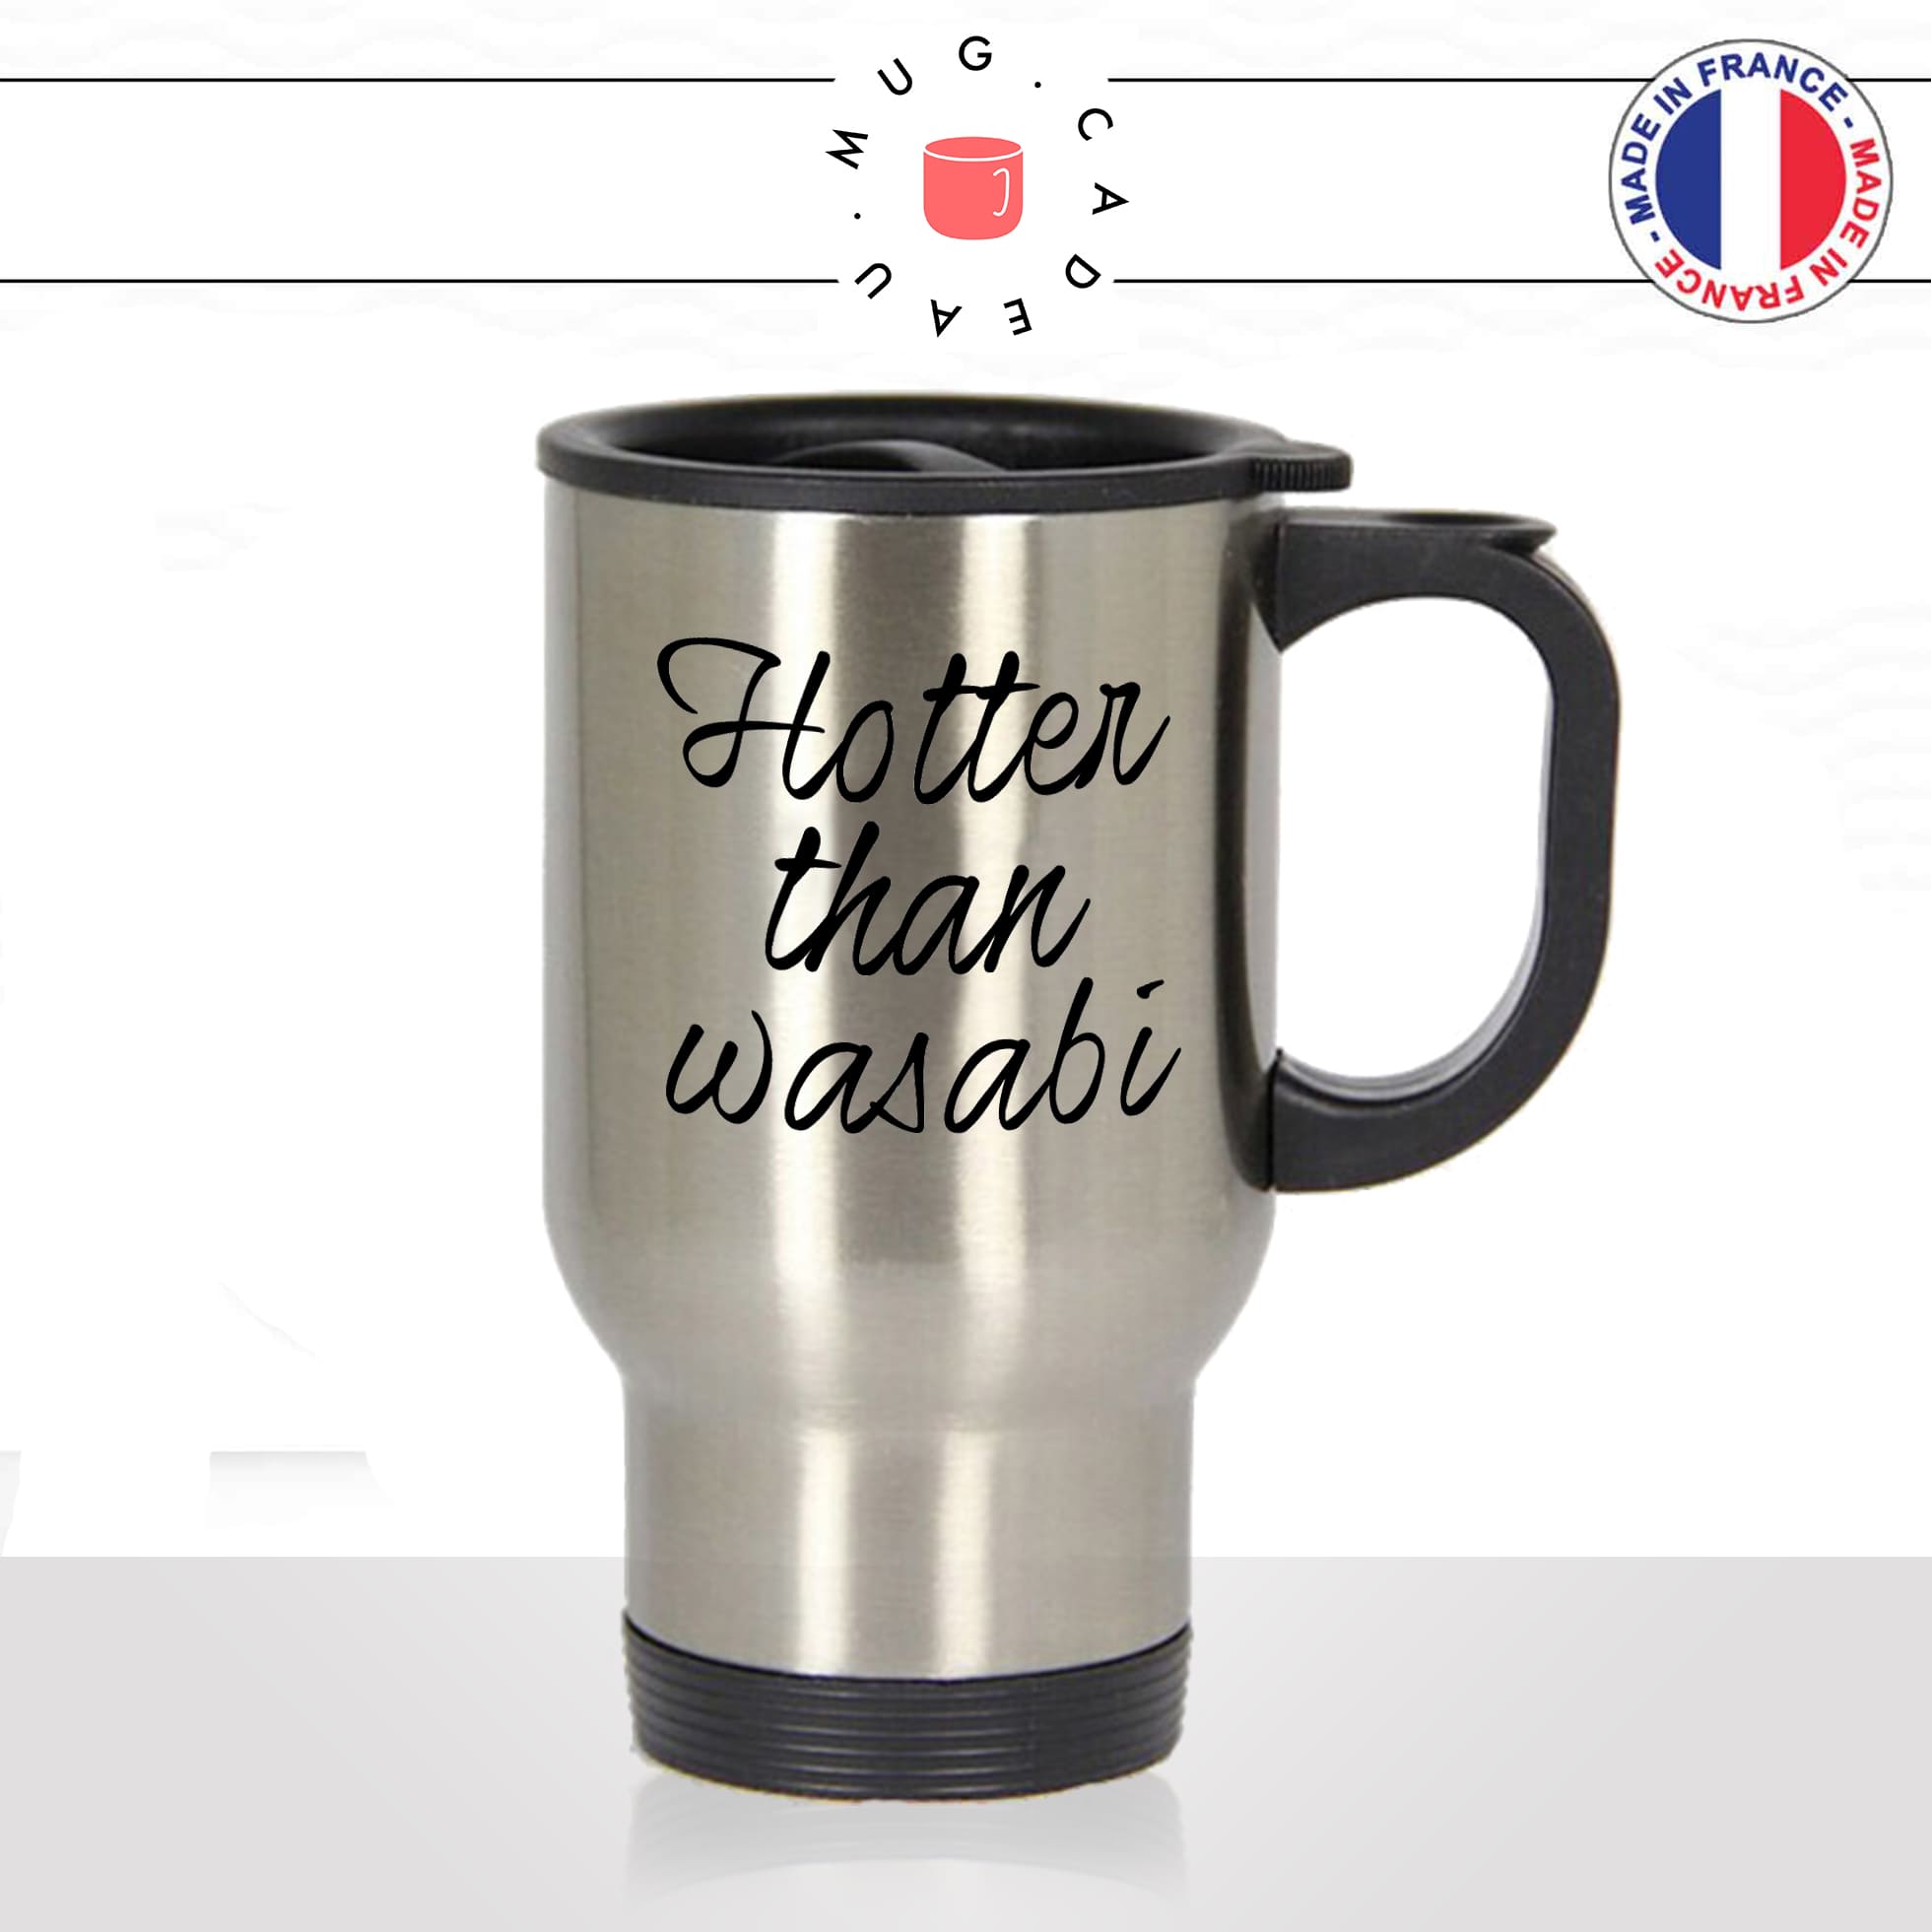 mug-tasse-thermos-isotherme-unique-hotter-than-wasabi-plus-chaude-piment-sexy-homme-femme-humour-fun-cool-idée-cadeau-original2